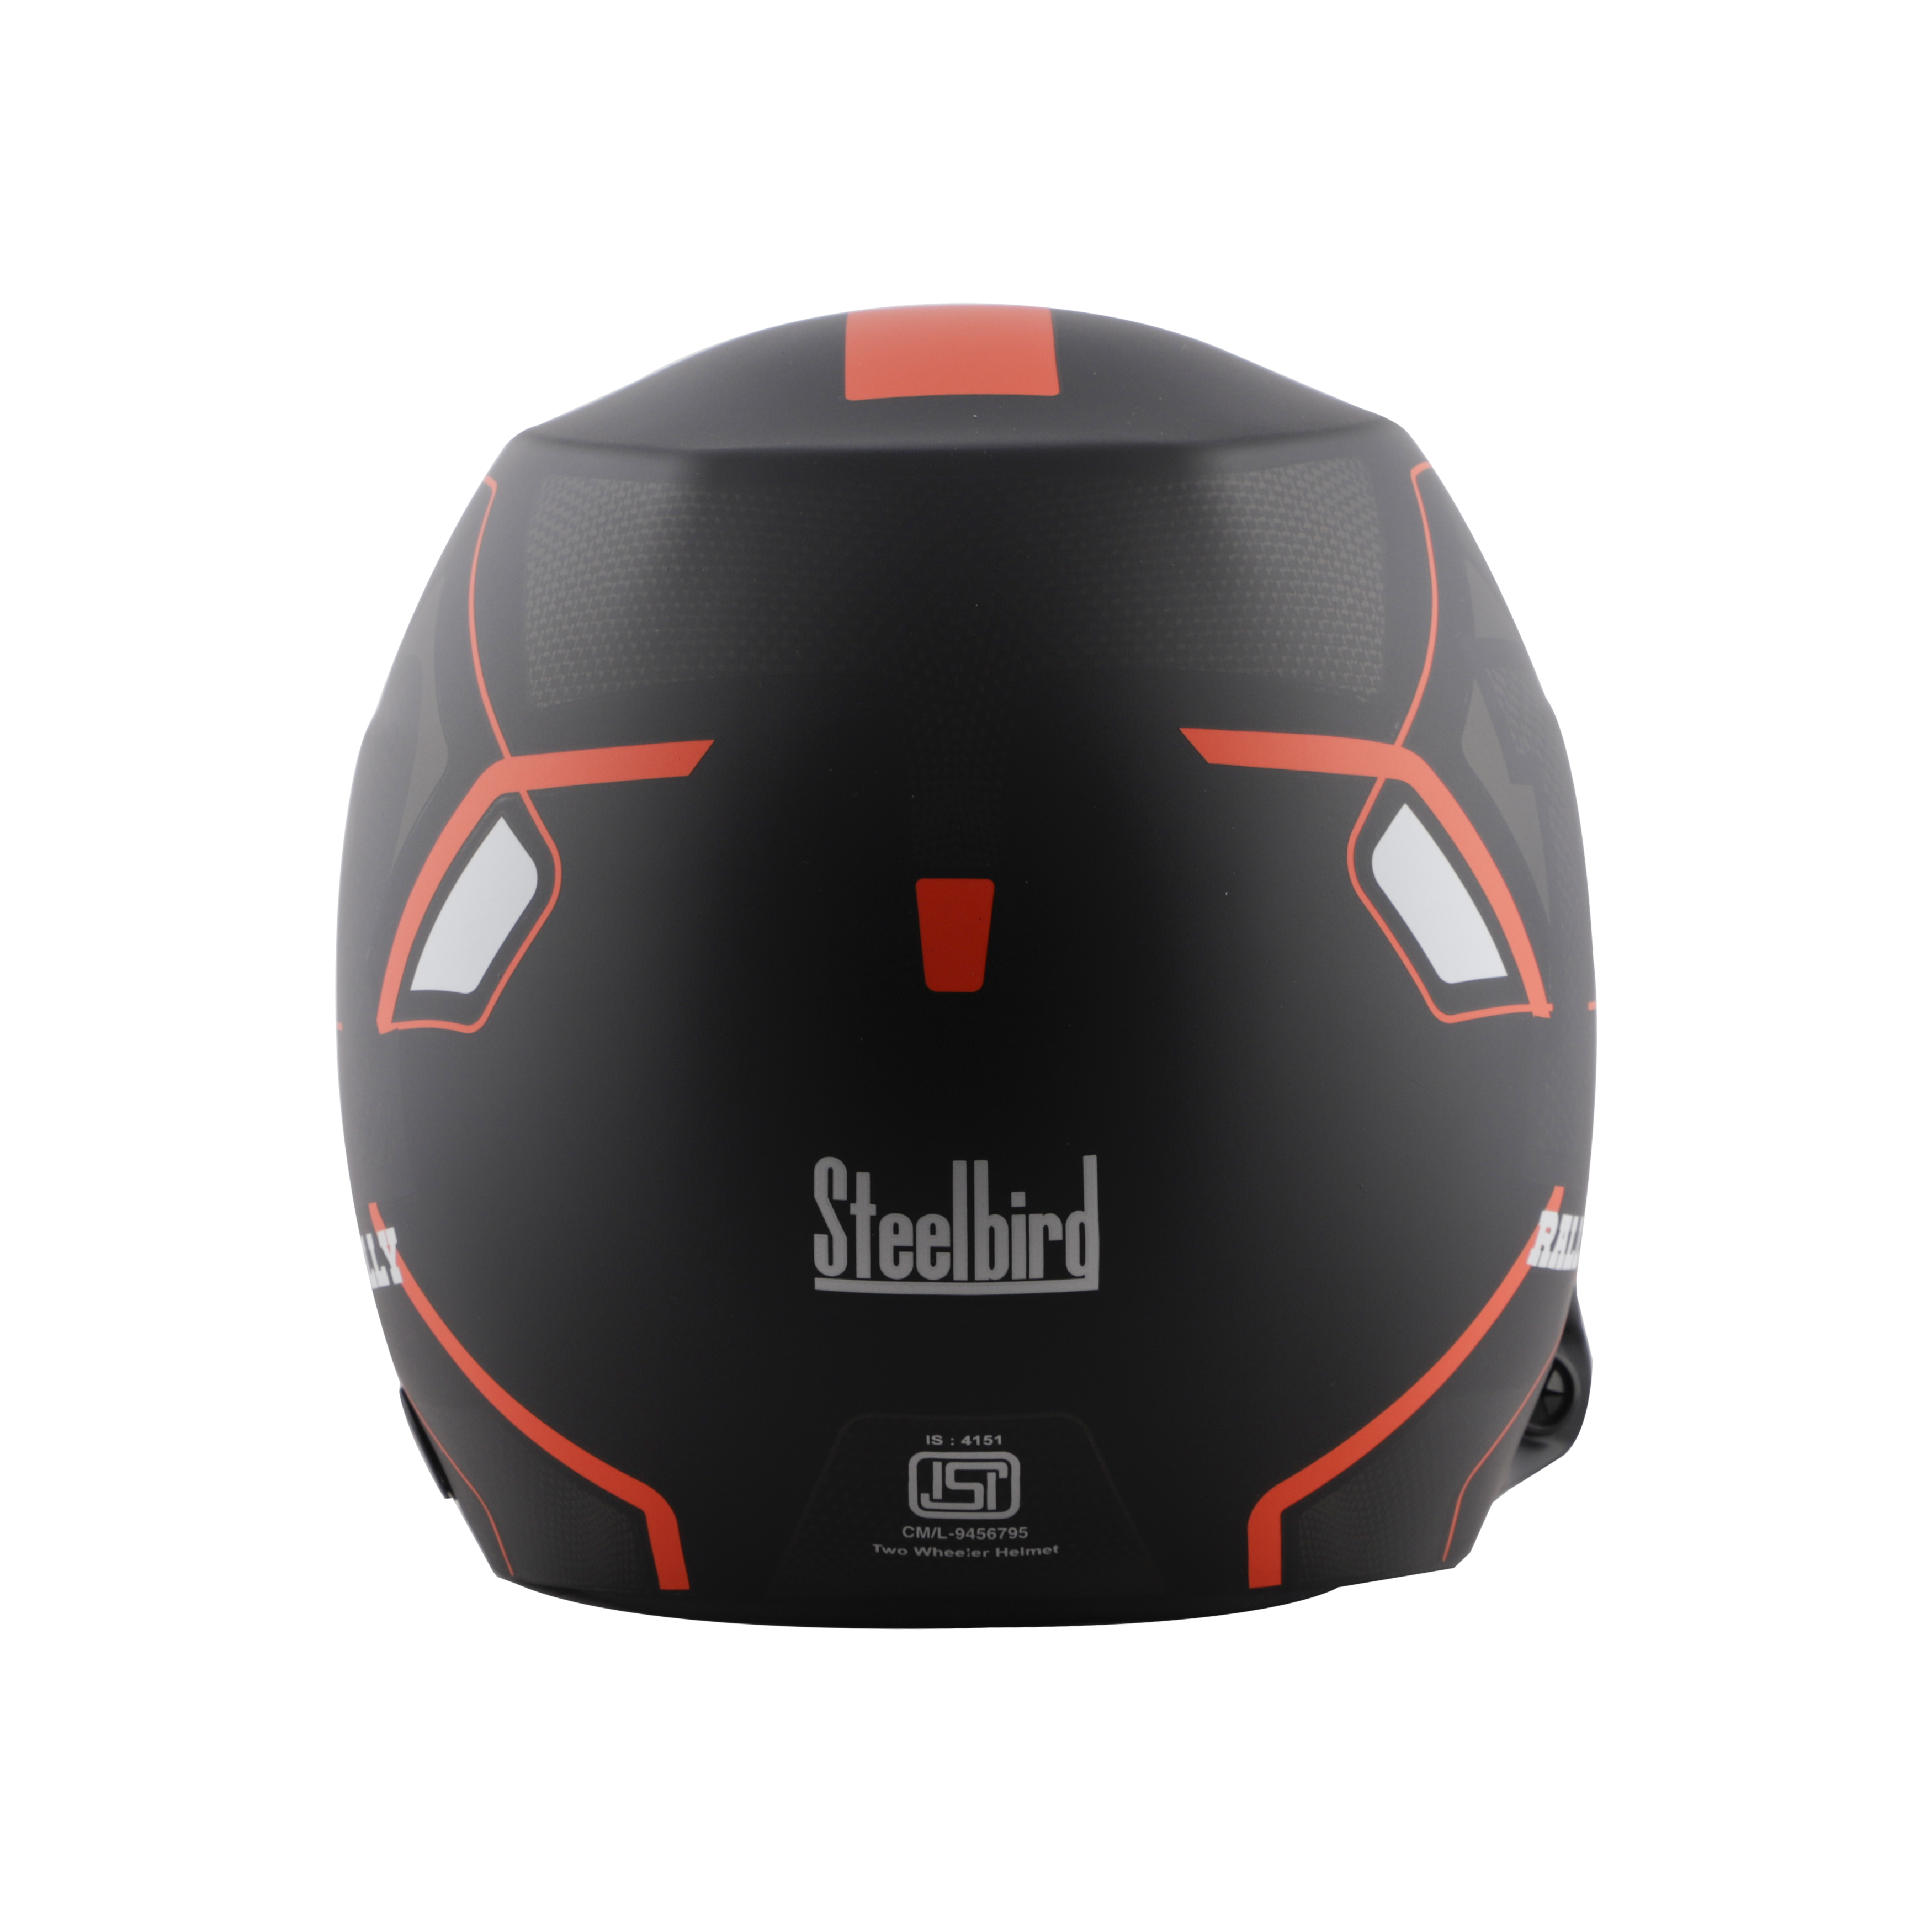 Steelbird 7Wings Rally Beat Open Face ISI Certified Off Road Helmet (Glossy Black Orange With Smoke Visor)